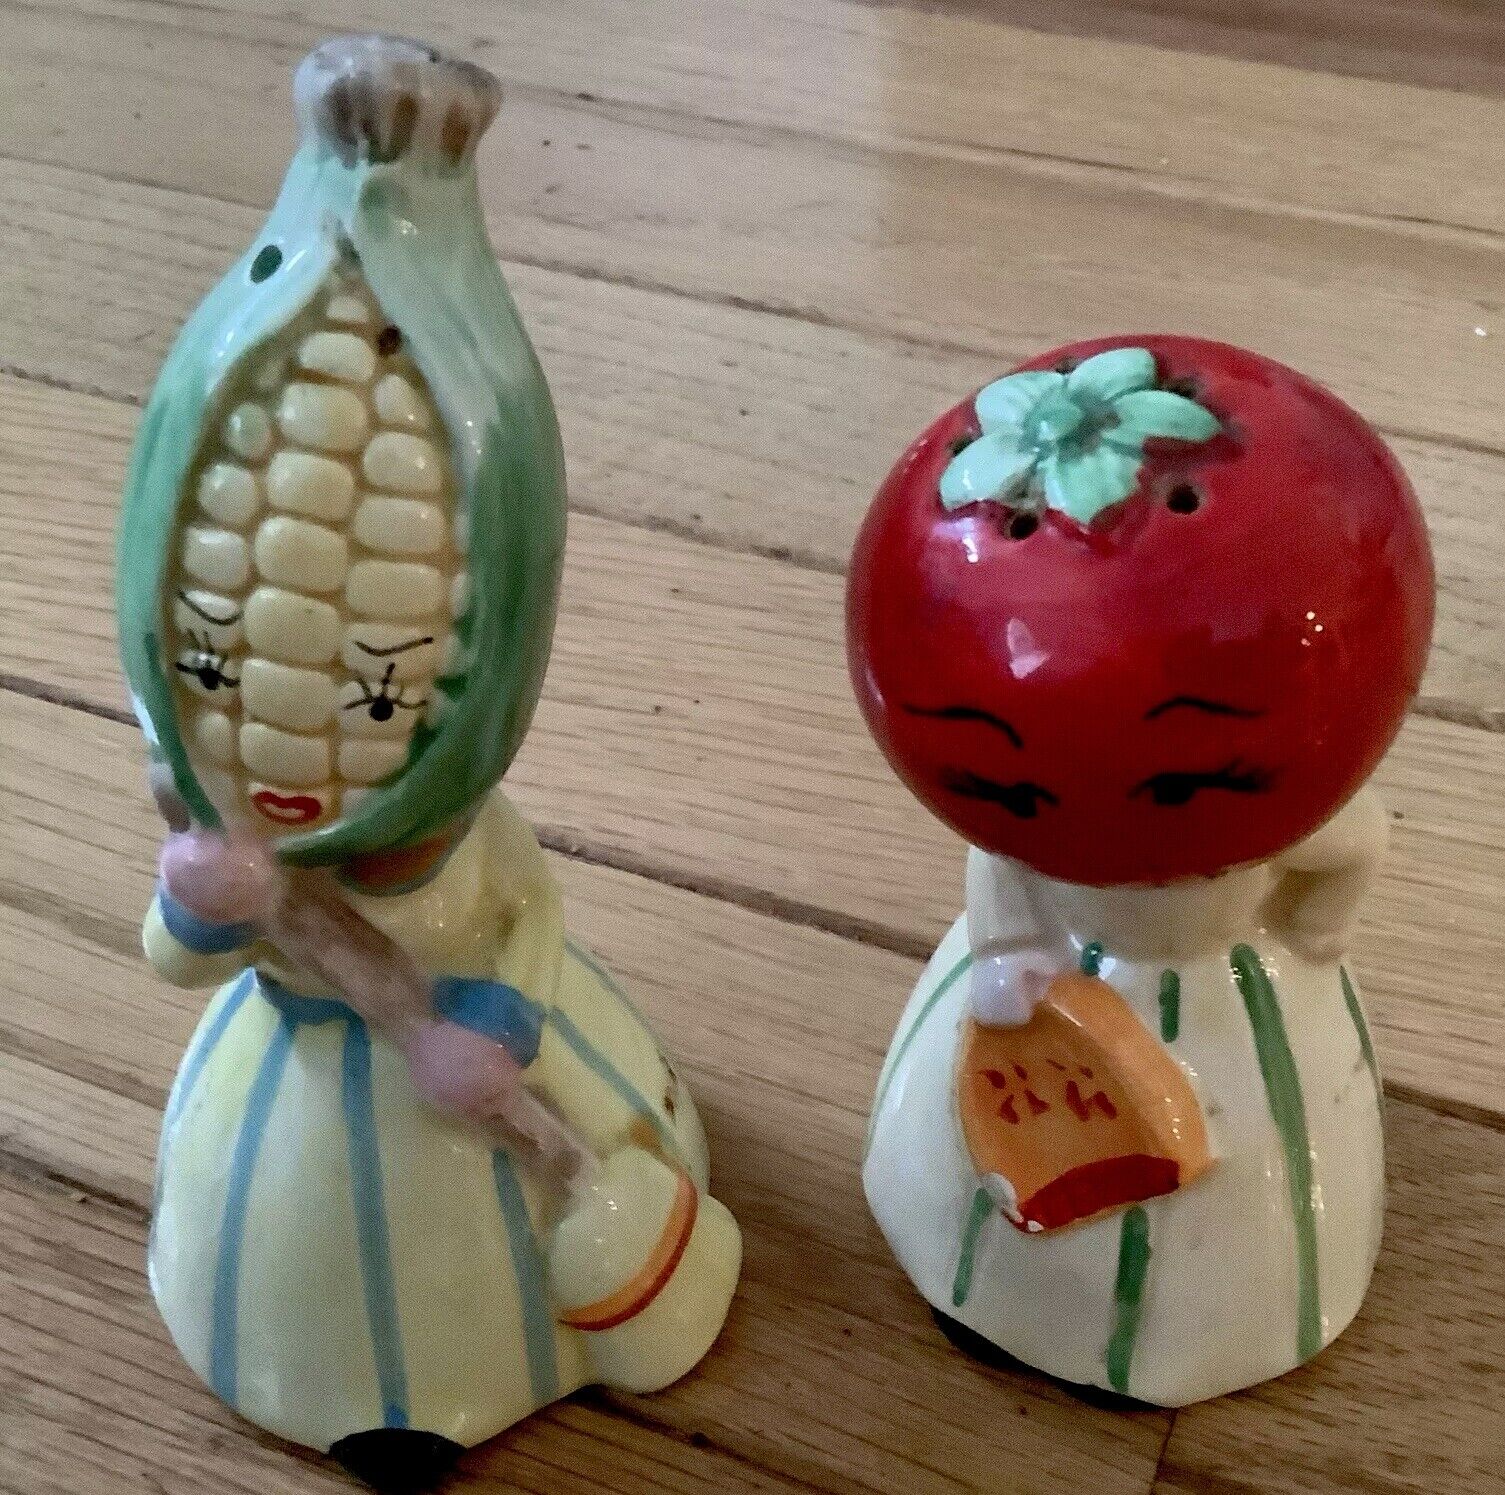 Anthropomorphic Corn & Tomato Salt & Pepper Shakers Vintage Kitsch